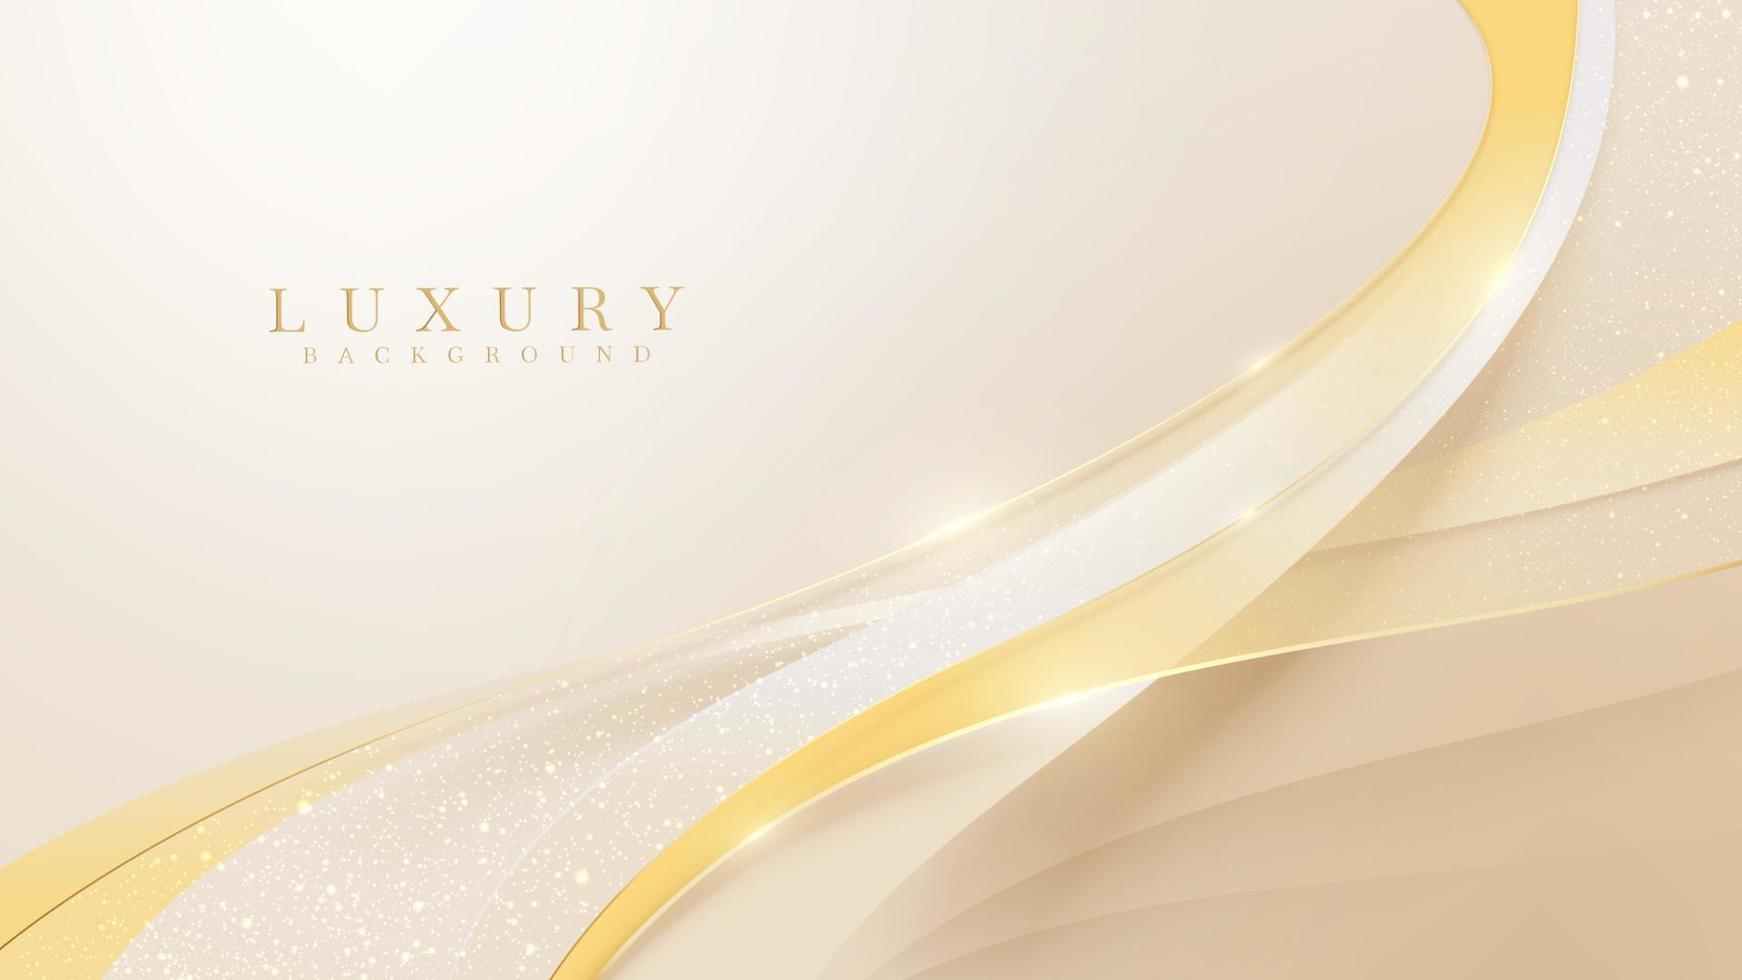 Elegant golden curve with glittering light effect decoration. Modern abstract background design. vector